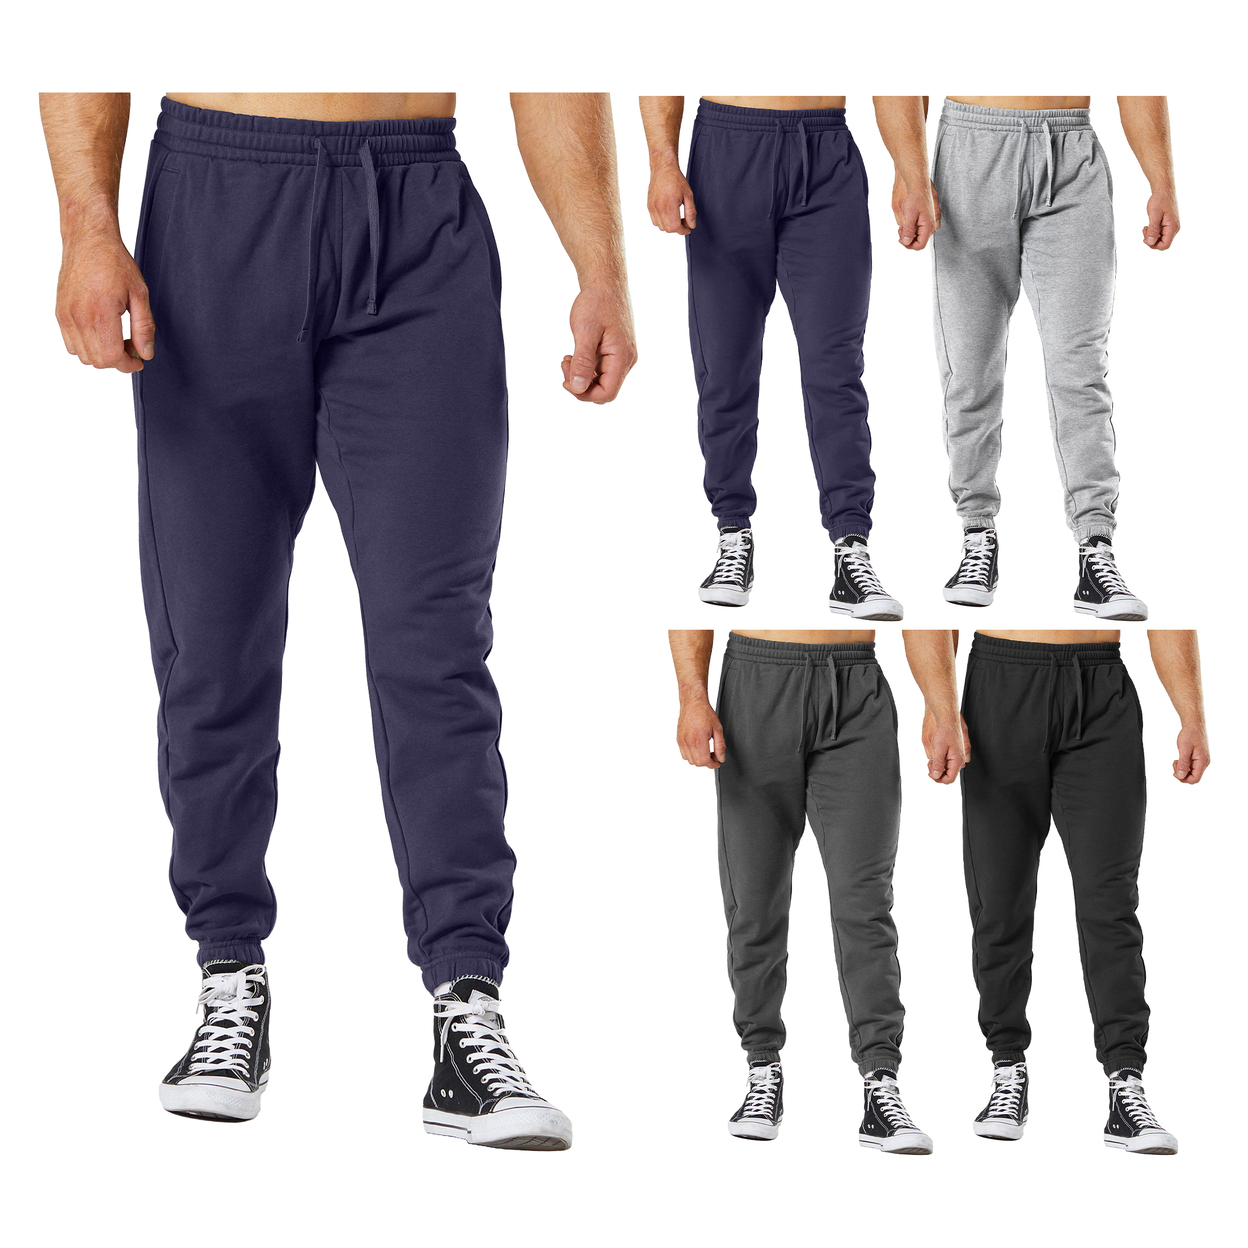 3-Pack: Men's Ultra-Soft Cozy Winter Warm Casual Fleece-Lined Sweatpants Jogger - Xx-large